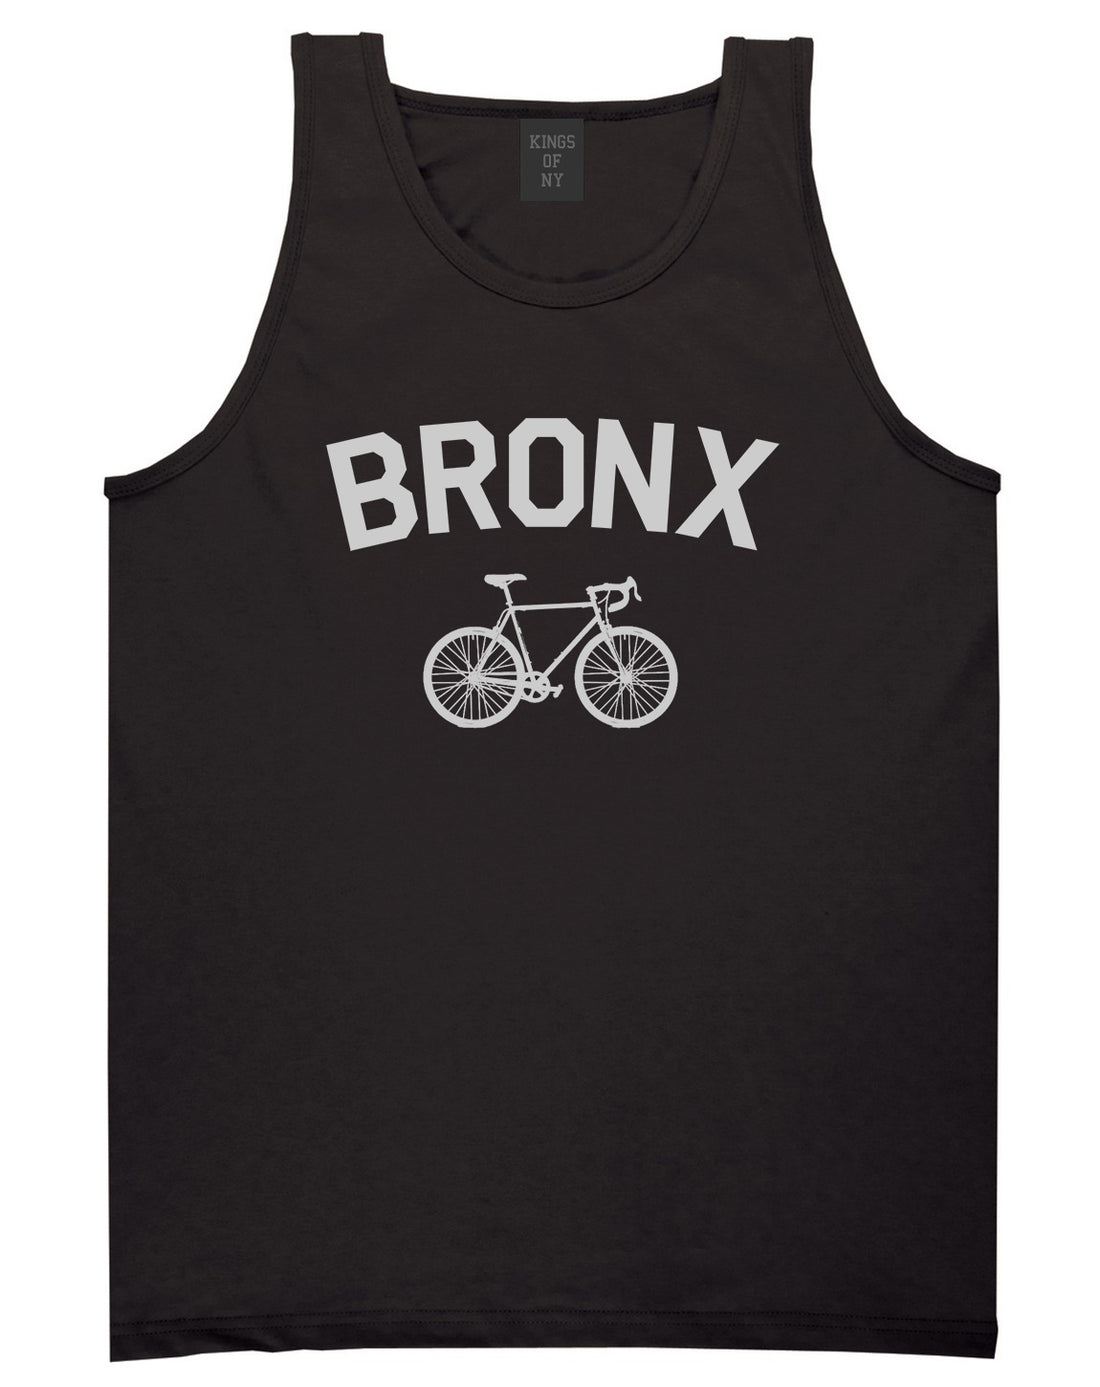 Bronx Vintage Bike Cycling Mens Tank Top T-Shirt Black